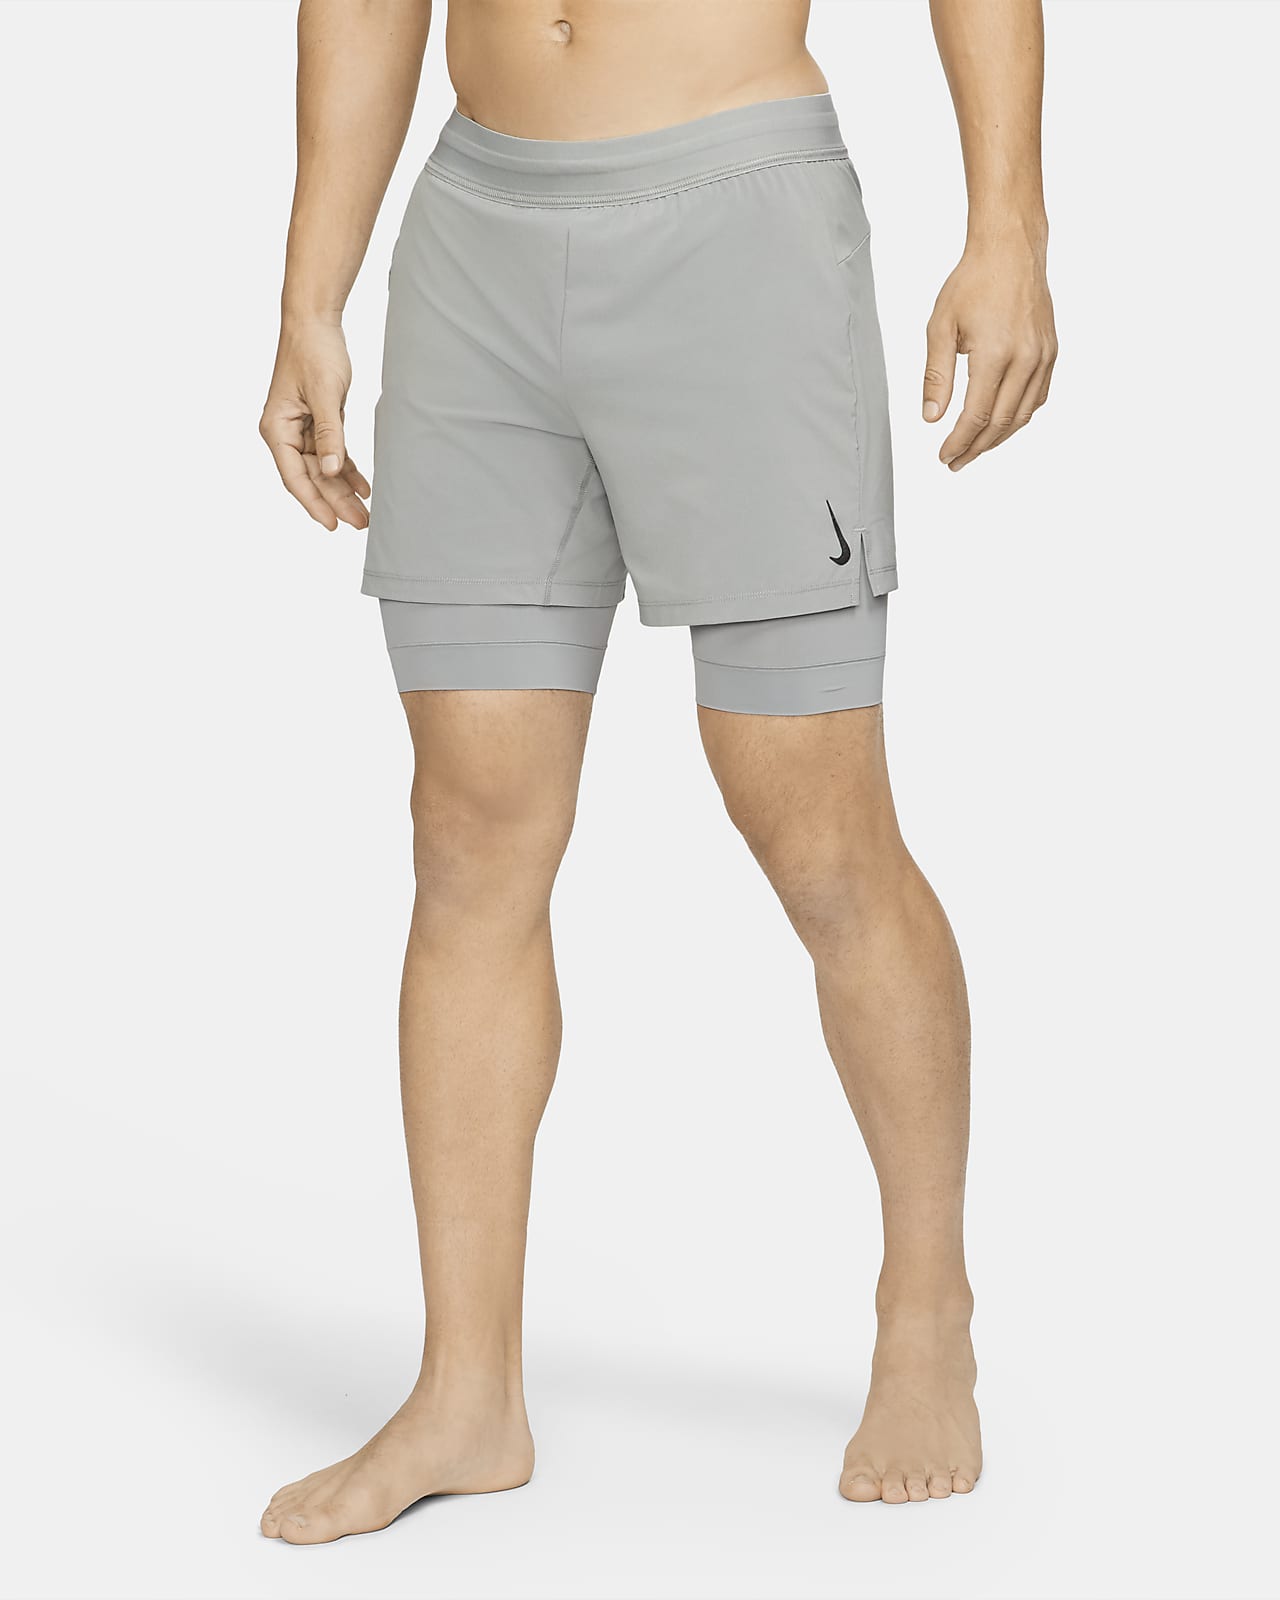 Мужские шорты 2 в 1 Nike Yoga. Nike RU